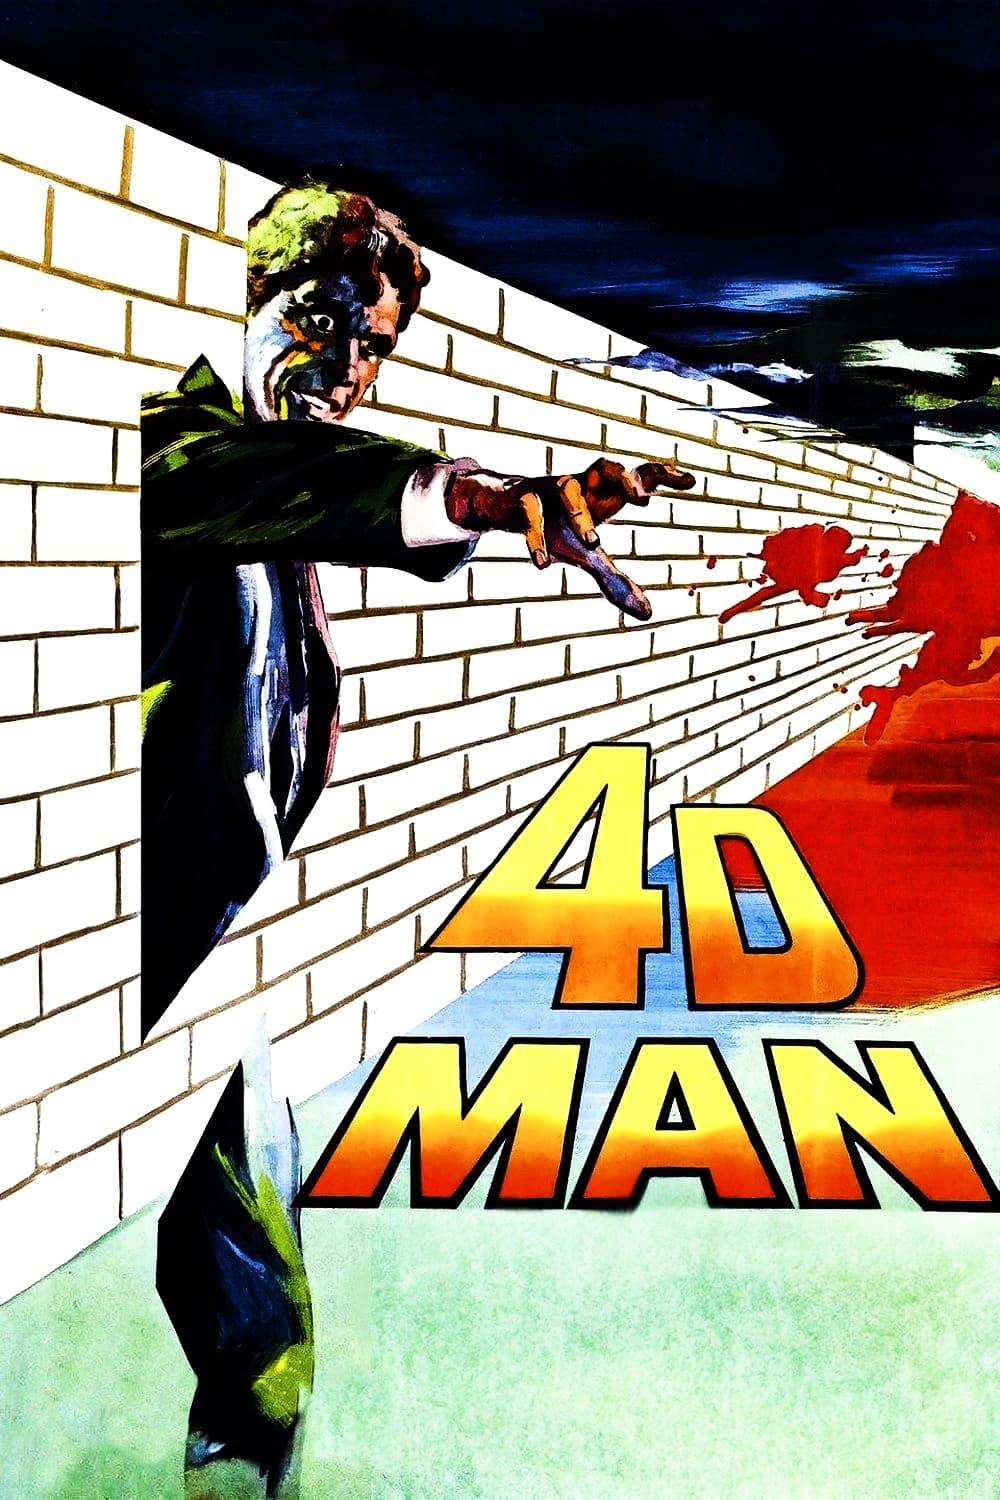 4D Man poster